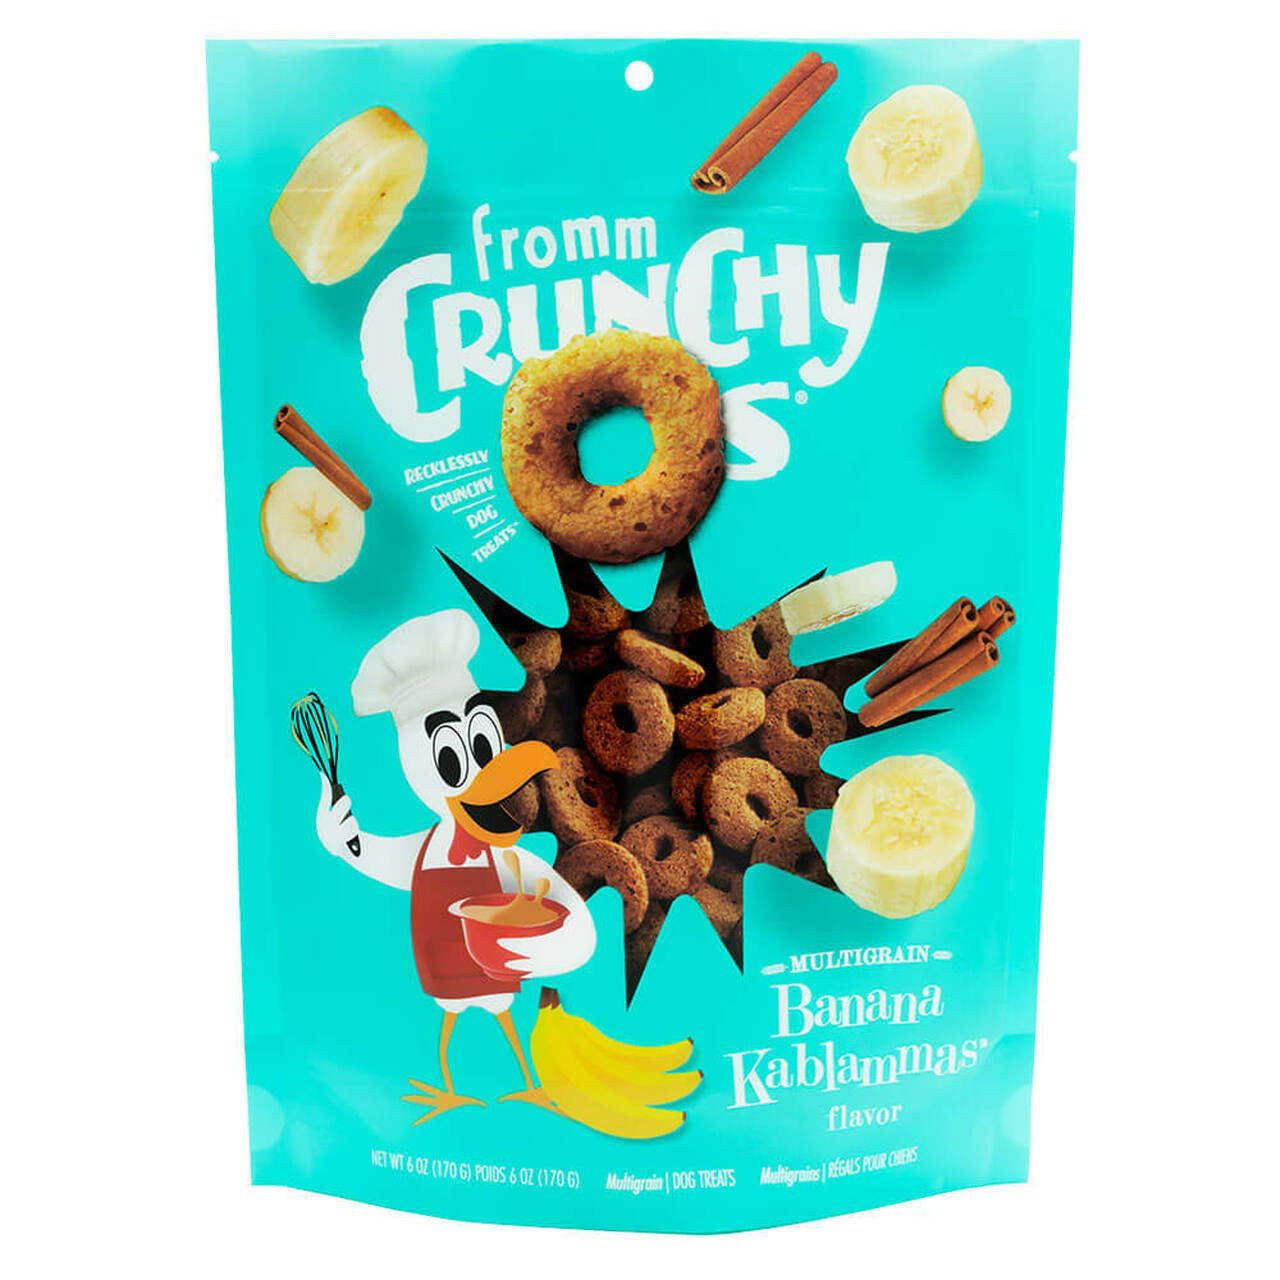 Fromm Crunchy OS Banana Kablammas Dog Treats 6 oz